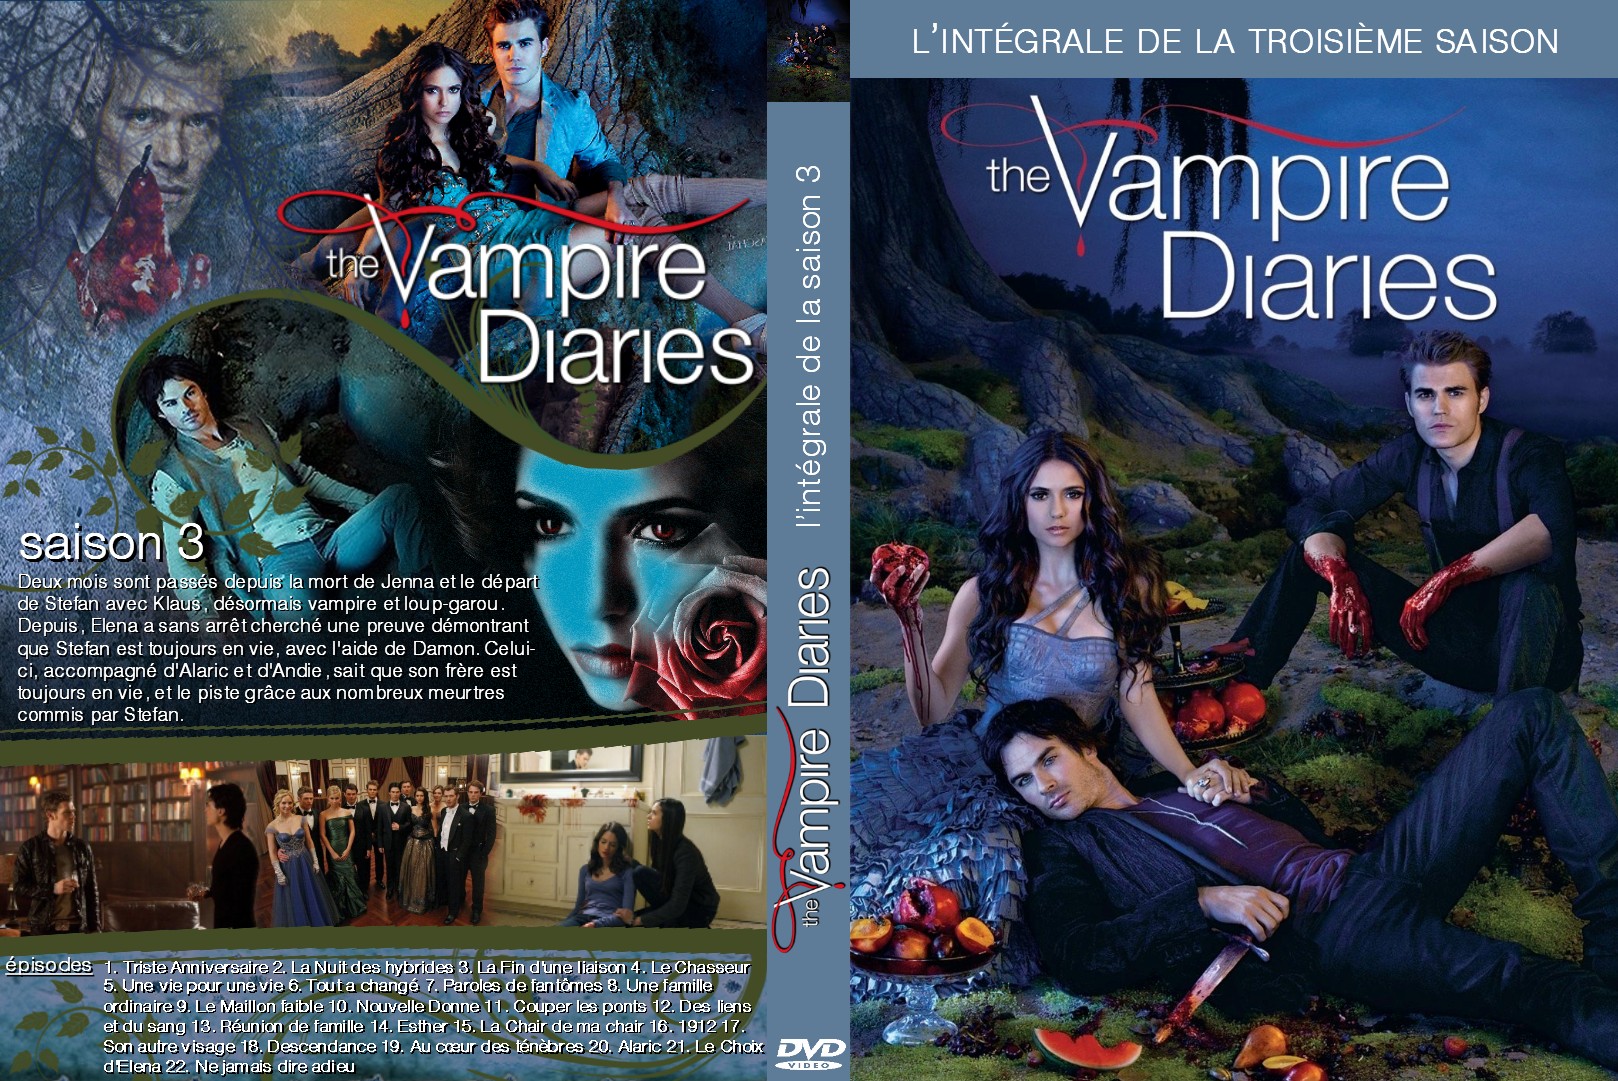 Jaquette DVD The vampire diaries Saison 3 custom